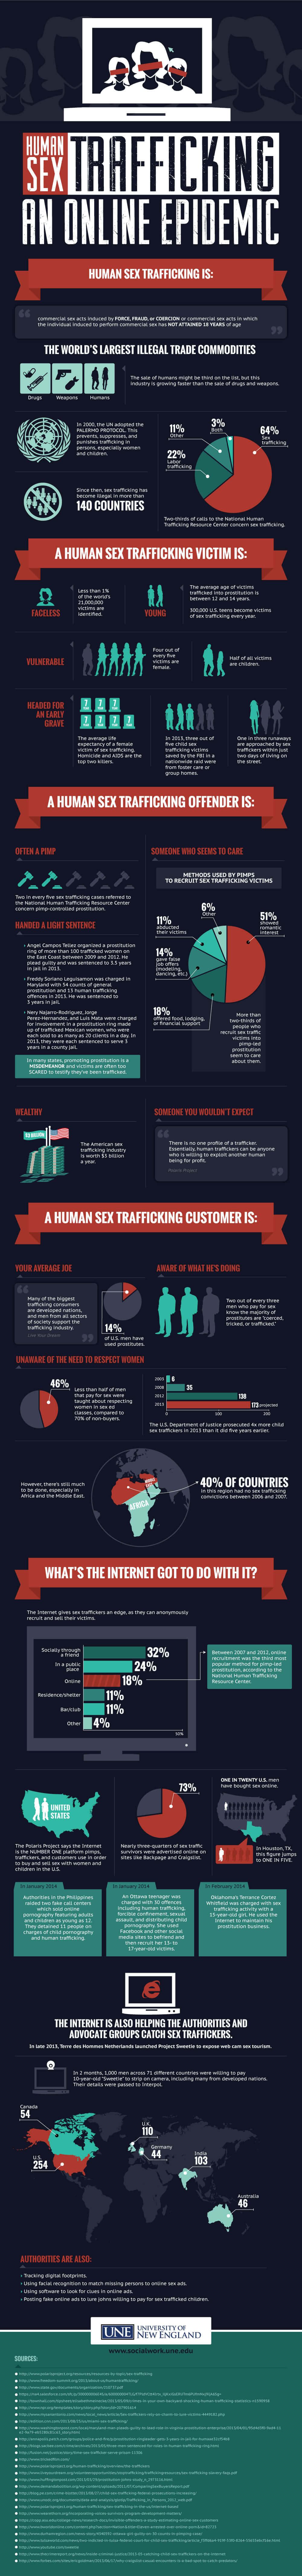 Human Sex Trafficking- An Online Epidemic